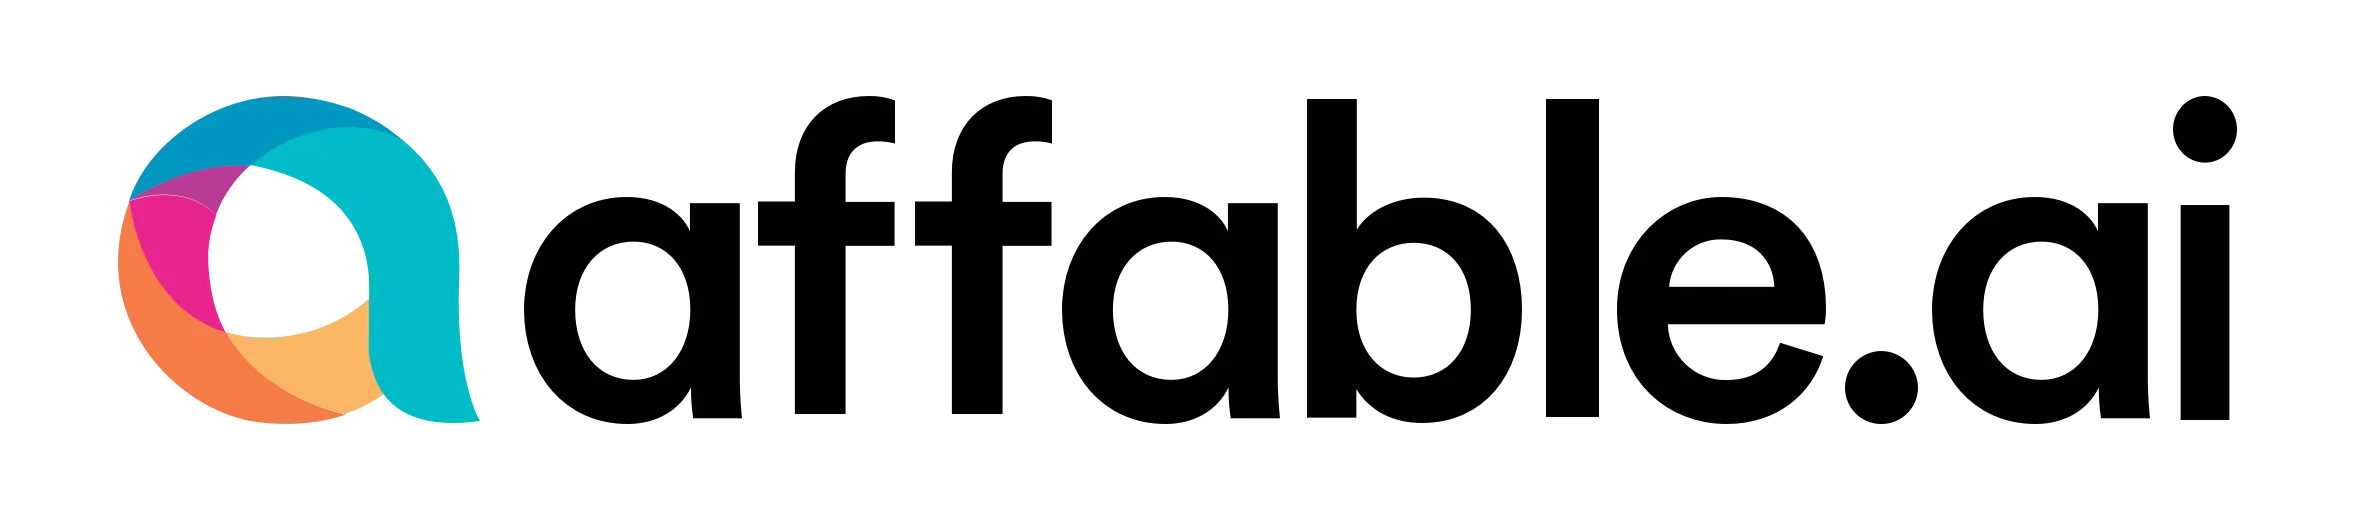 Affable Logo - Indonesia